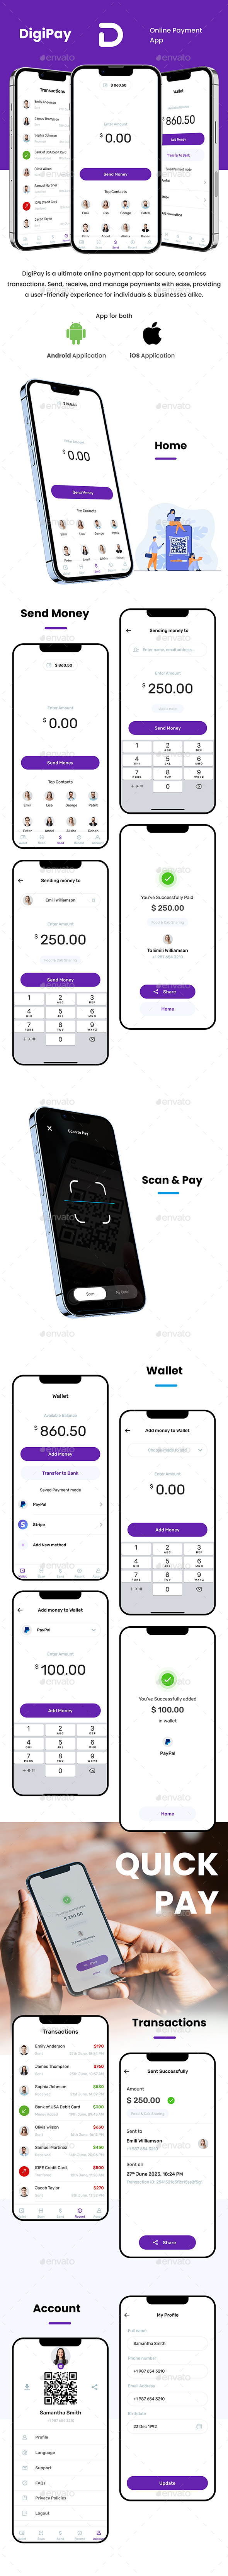 Online Payment App UI Kit | Digital Wallet UI | Digital Payment | DigiPay